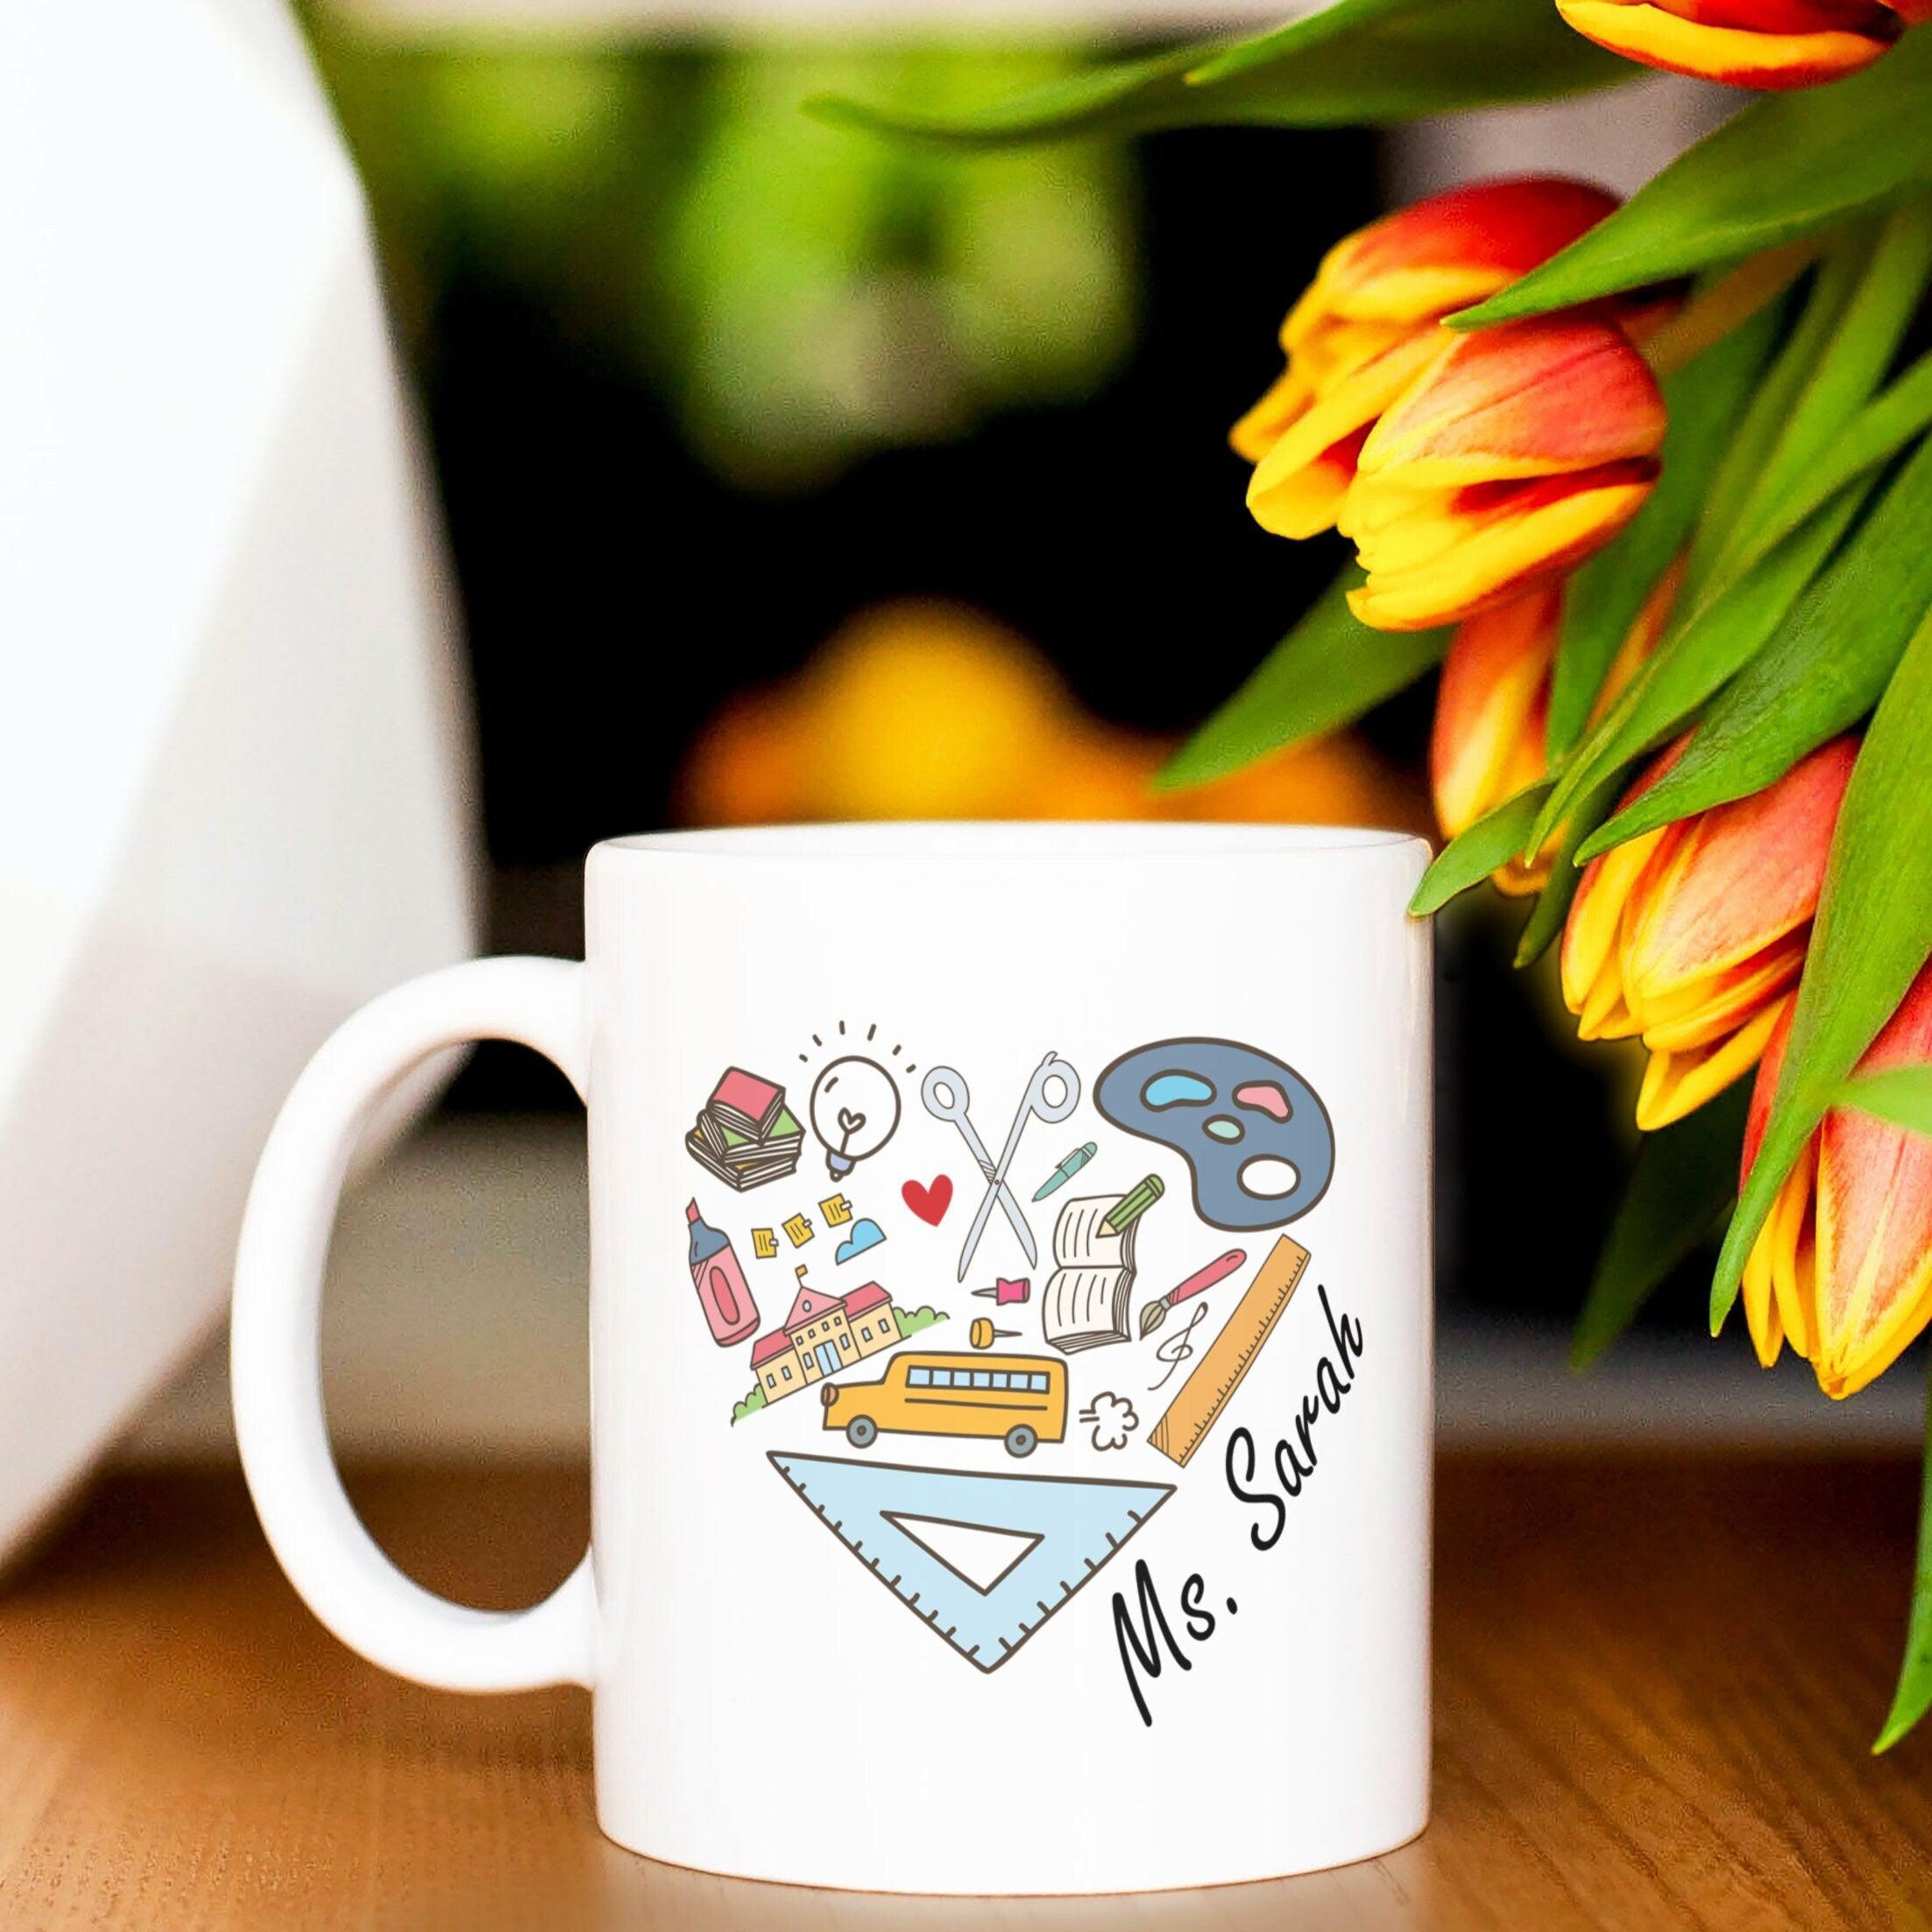 Personalized Teacher Mug - Sweet Teacher Coffee Cup from Student - Teacher Cup for End of Year Gift -  Preschool Heart Teacher Mug